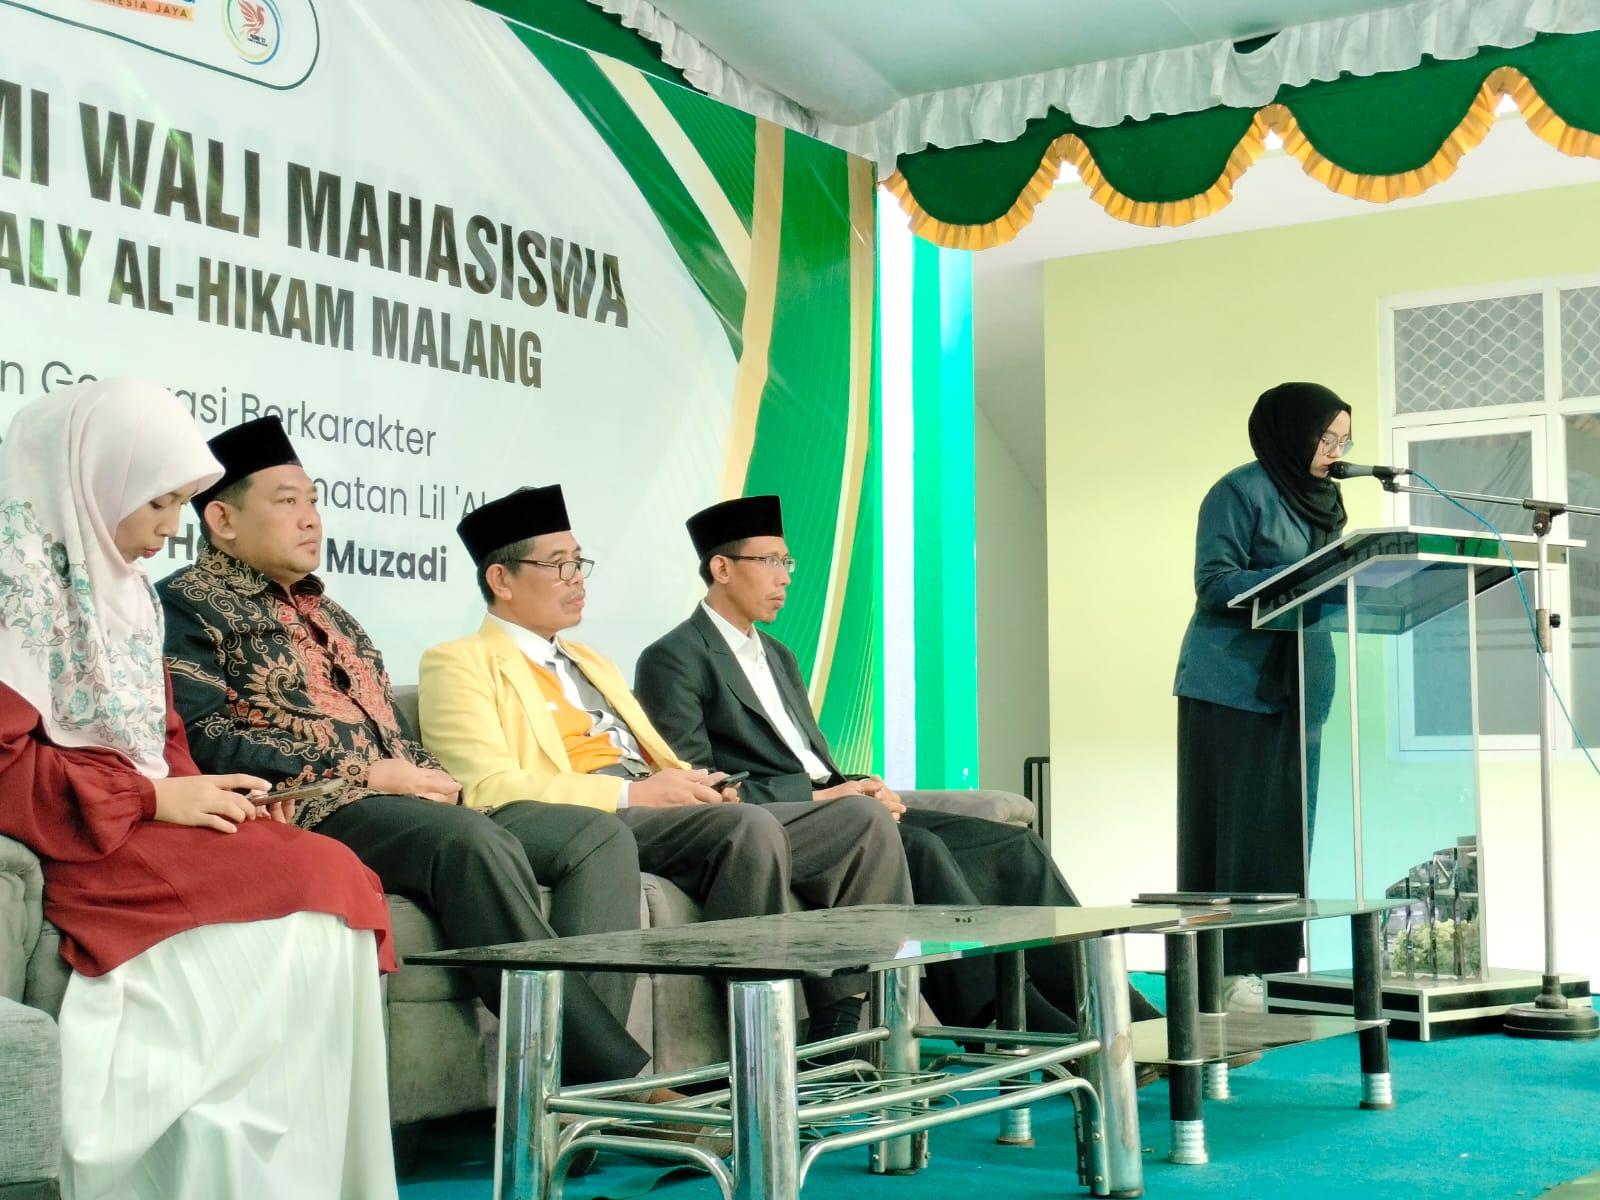 Pompa Semangat Menuju Universitas Hasyim Muzadi